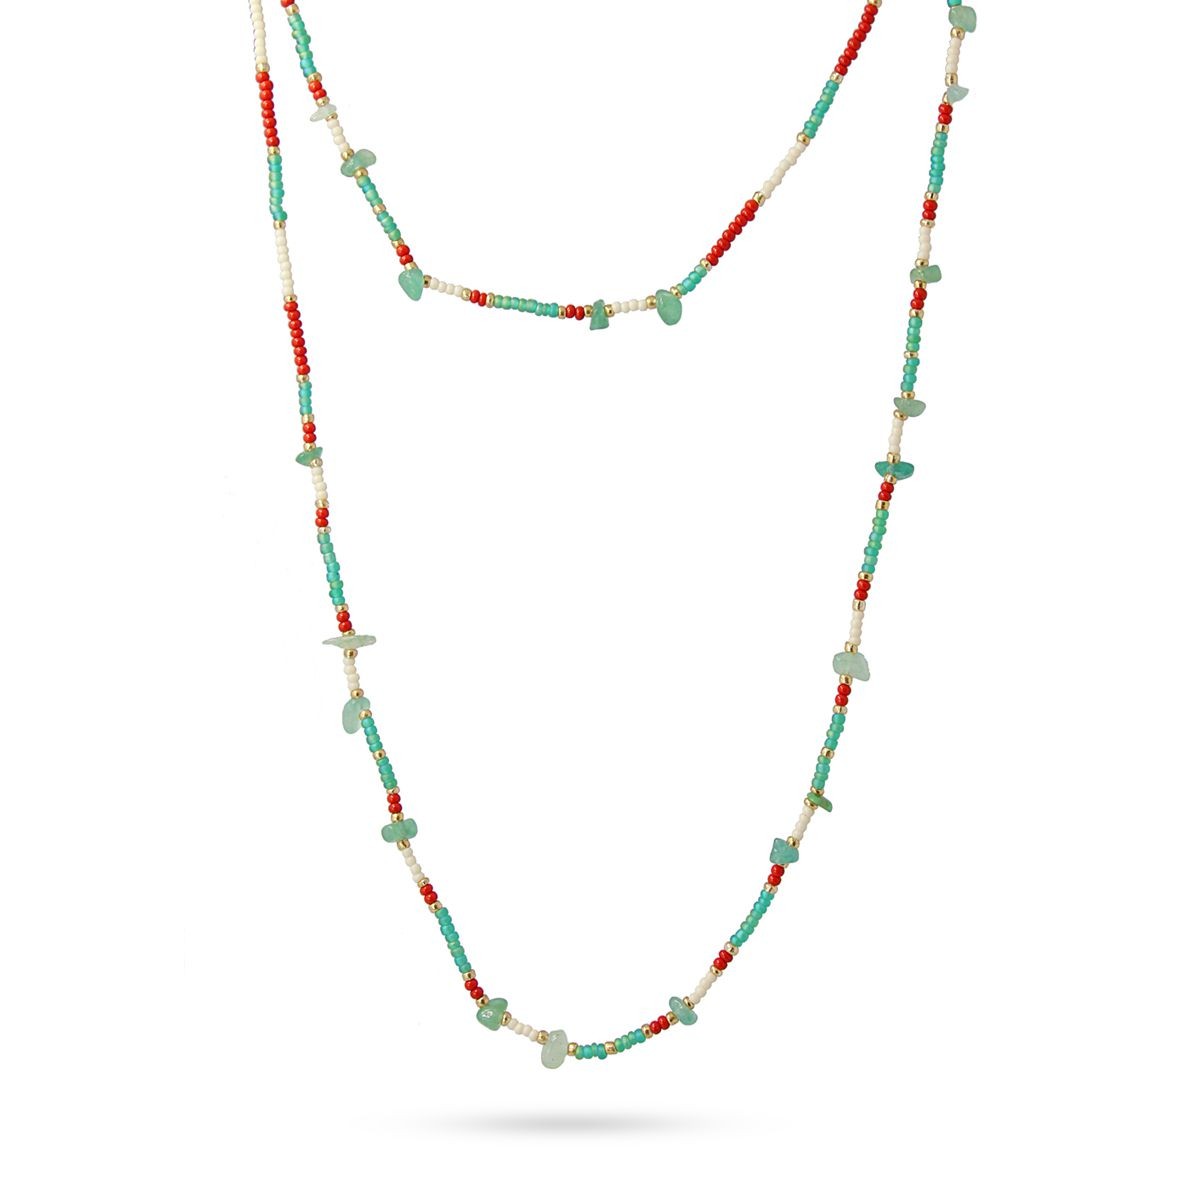 Mekong long necklace